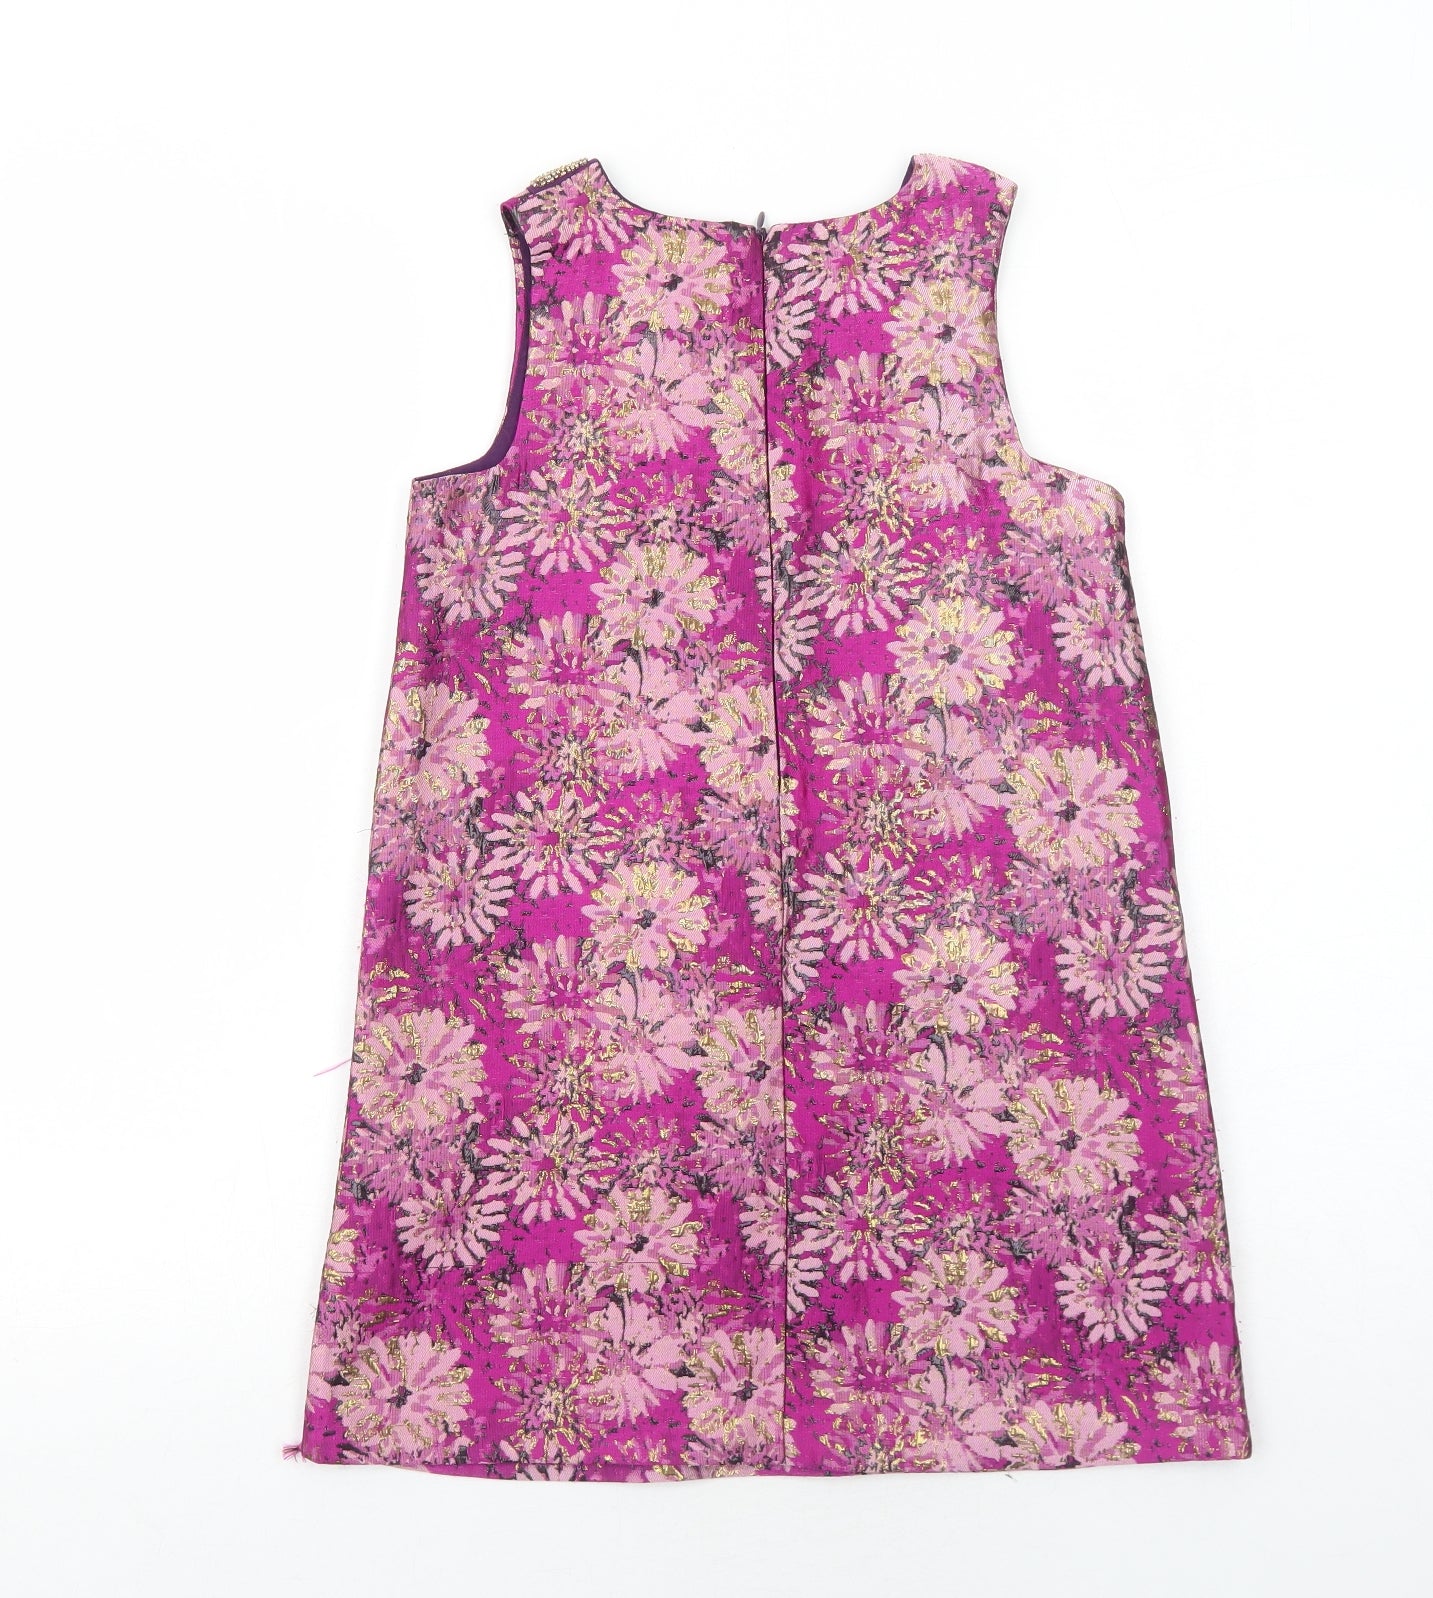 Kaisley Girls Purple Floral Polyester Shift Size 7-8 Years Boat Neck Zip - Embellished Neckline